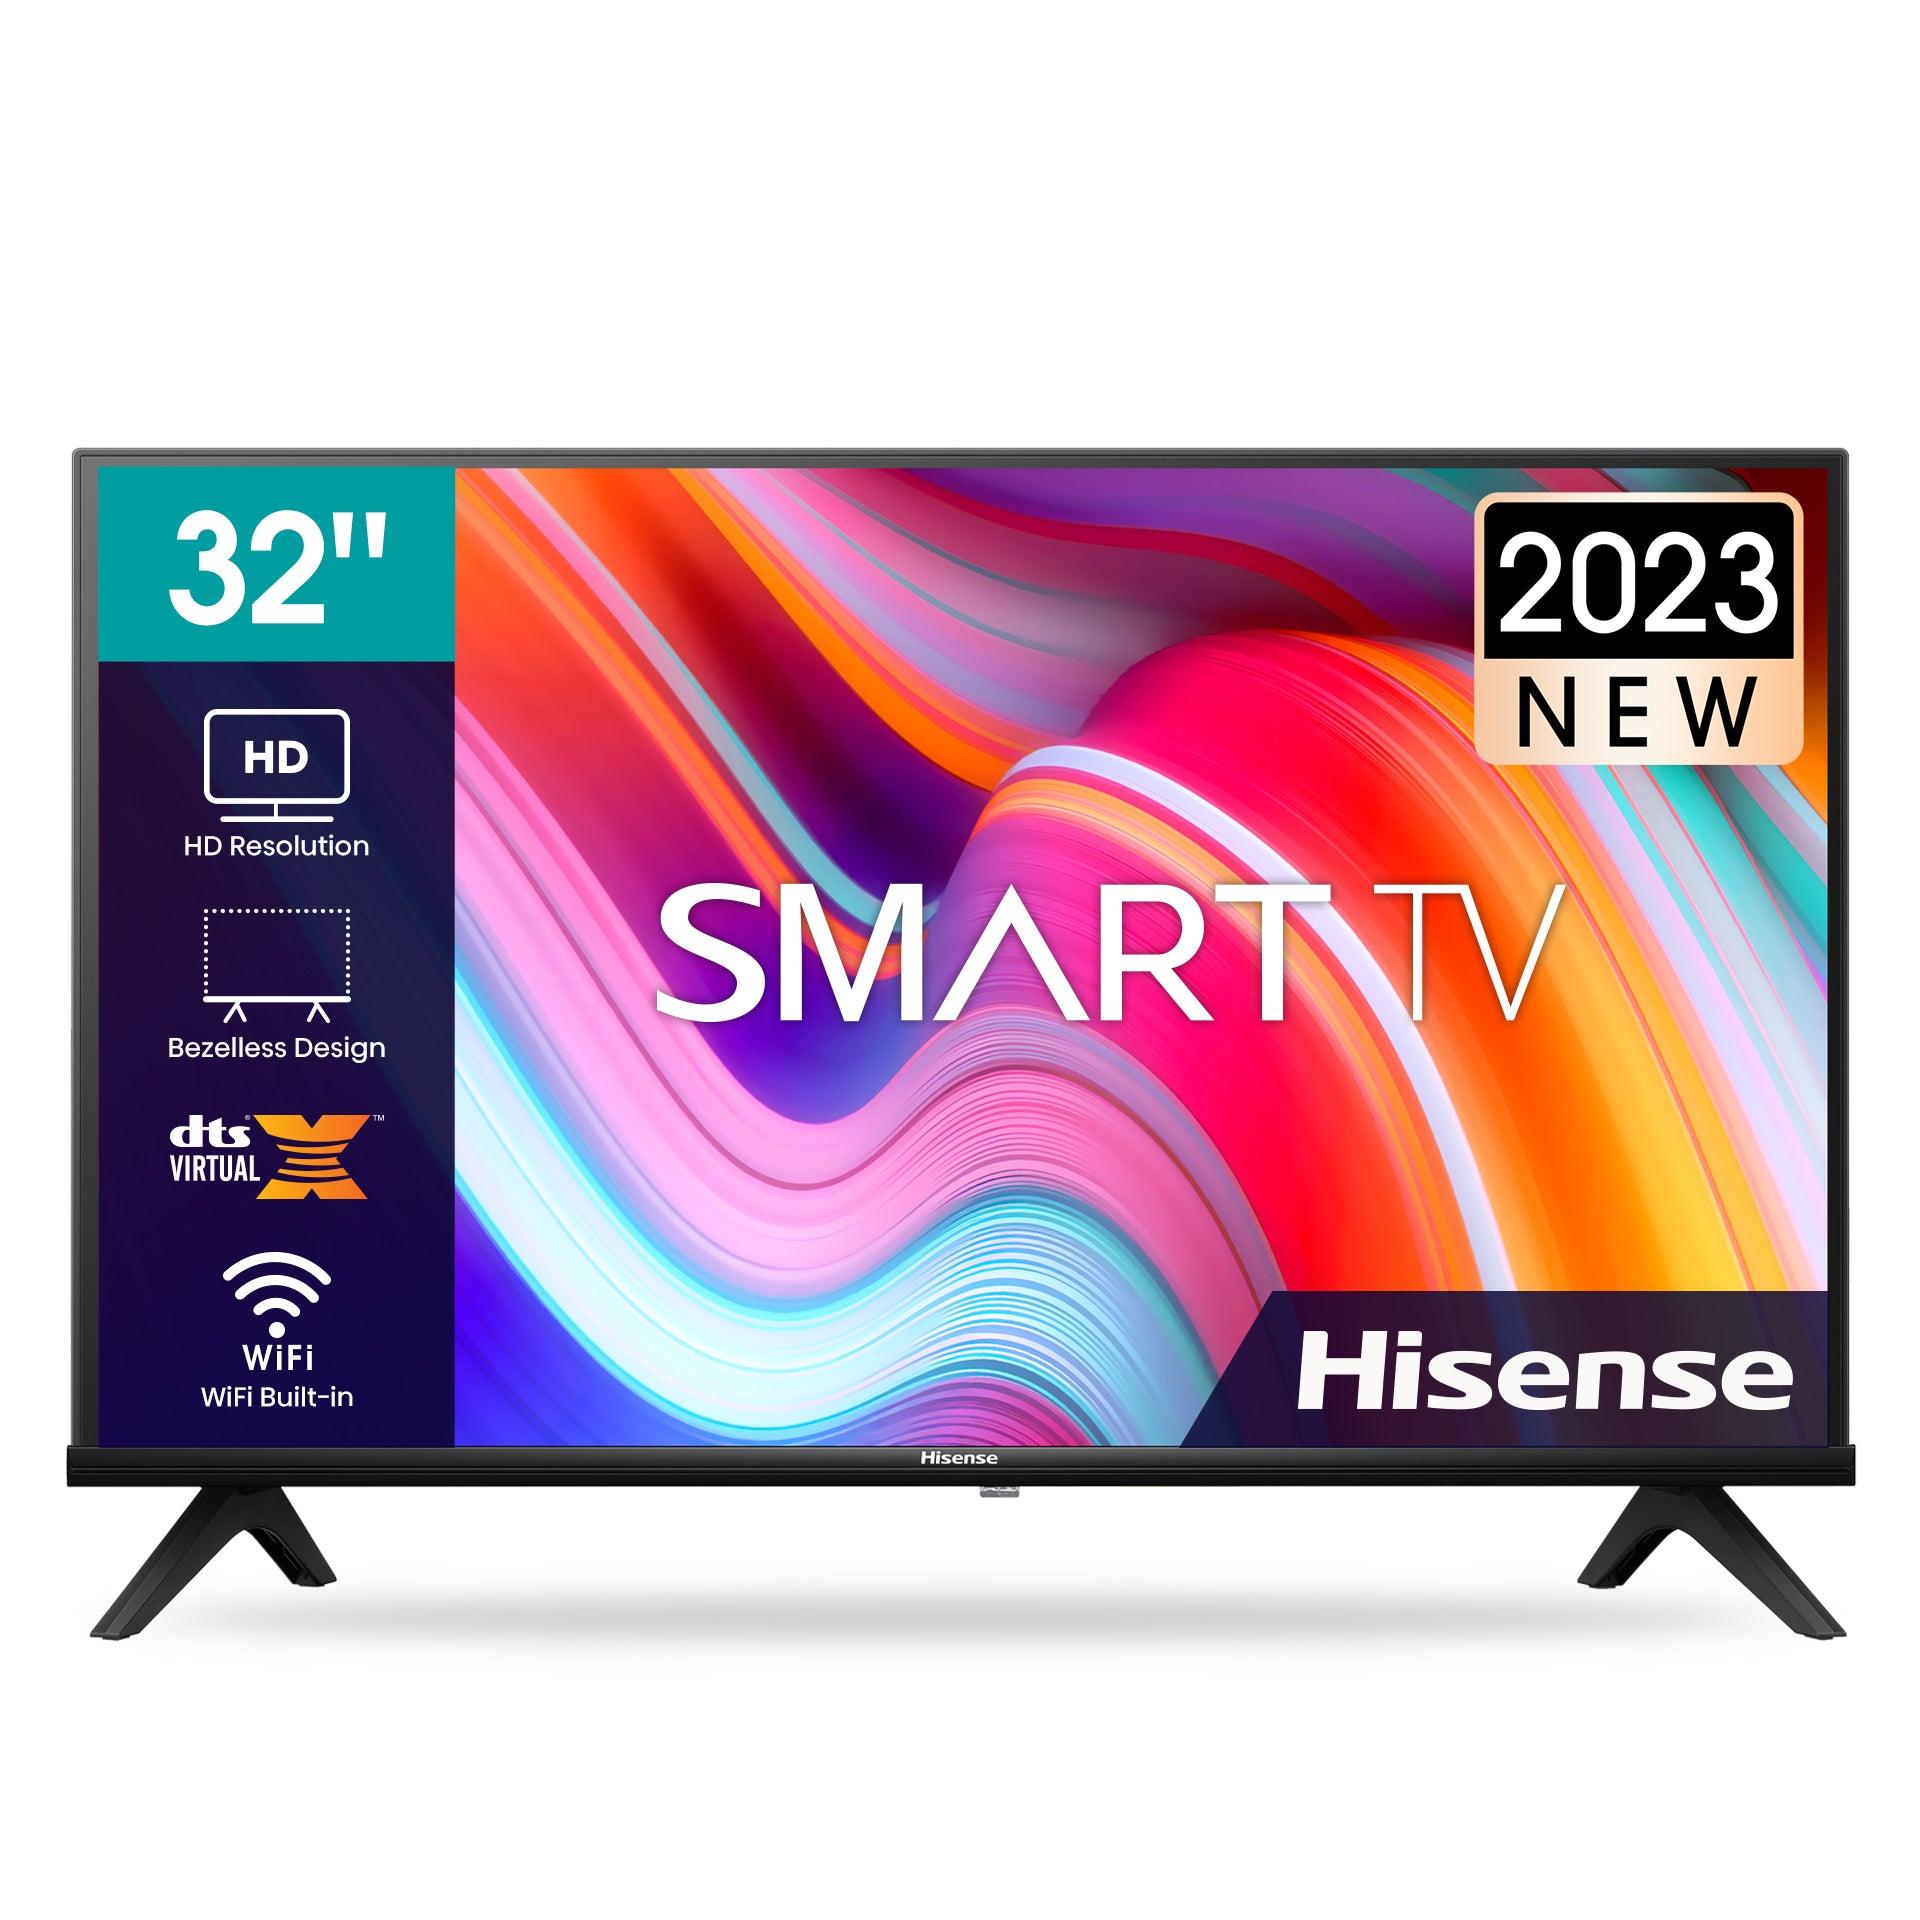 HISENSE 32" FHD SMART TV 2023 NAMIBIA AUDIO MECCA CC